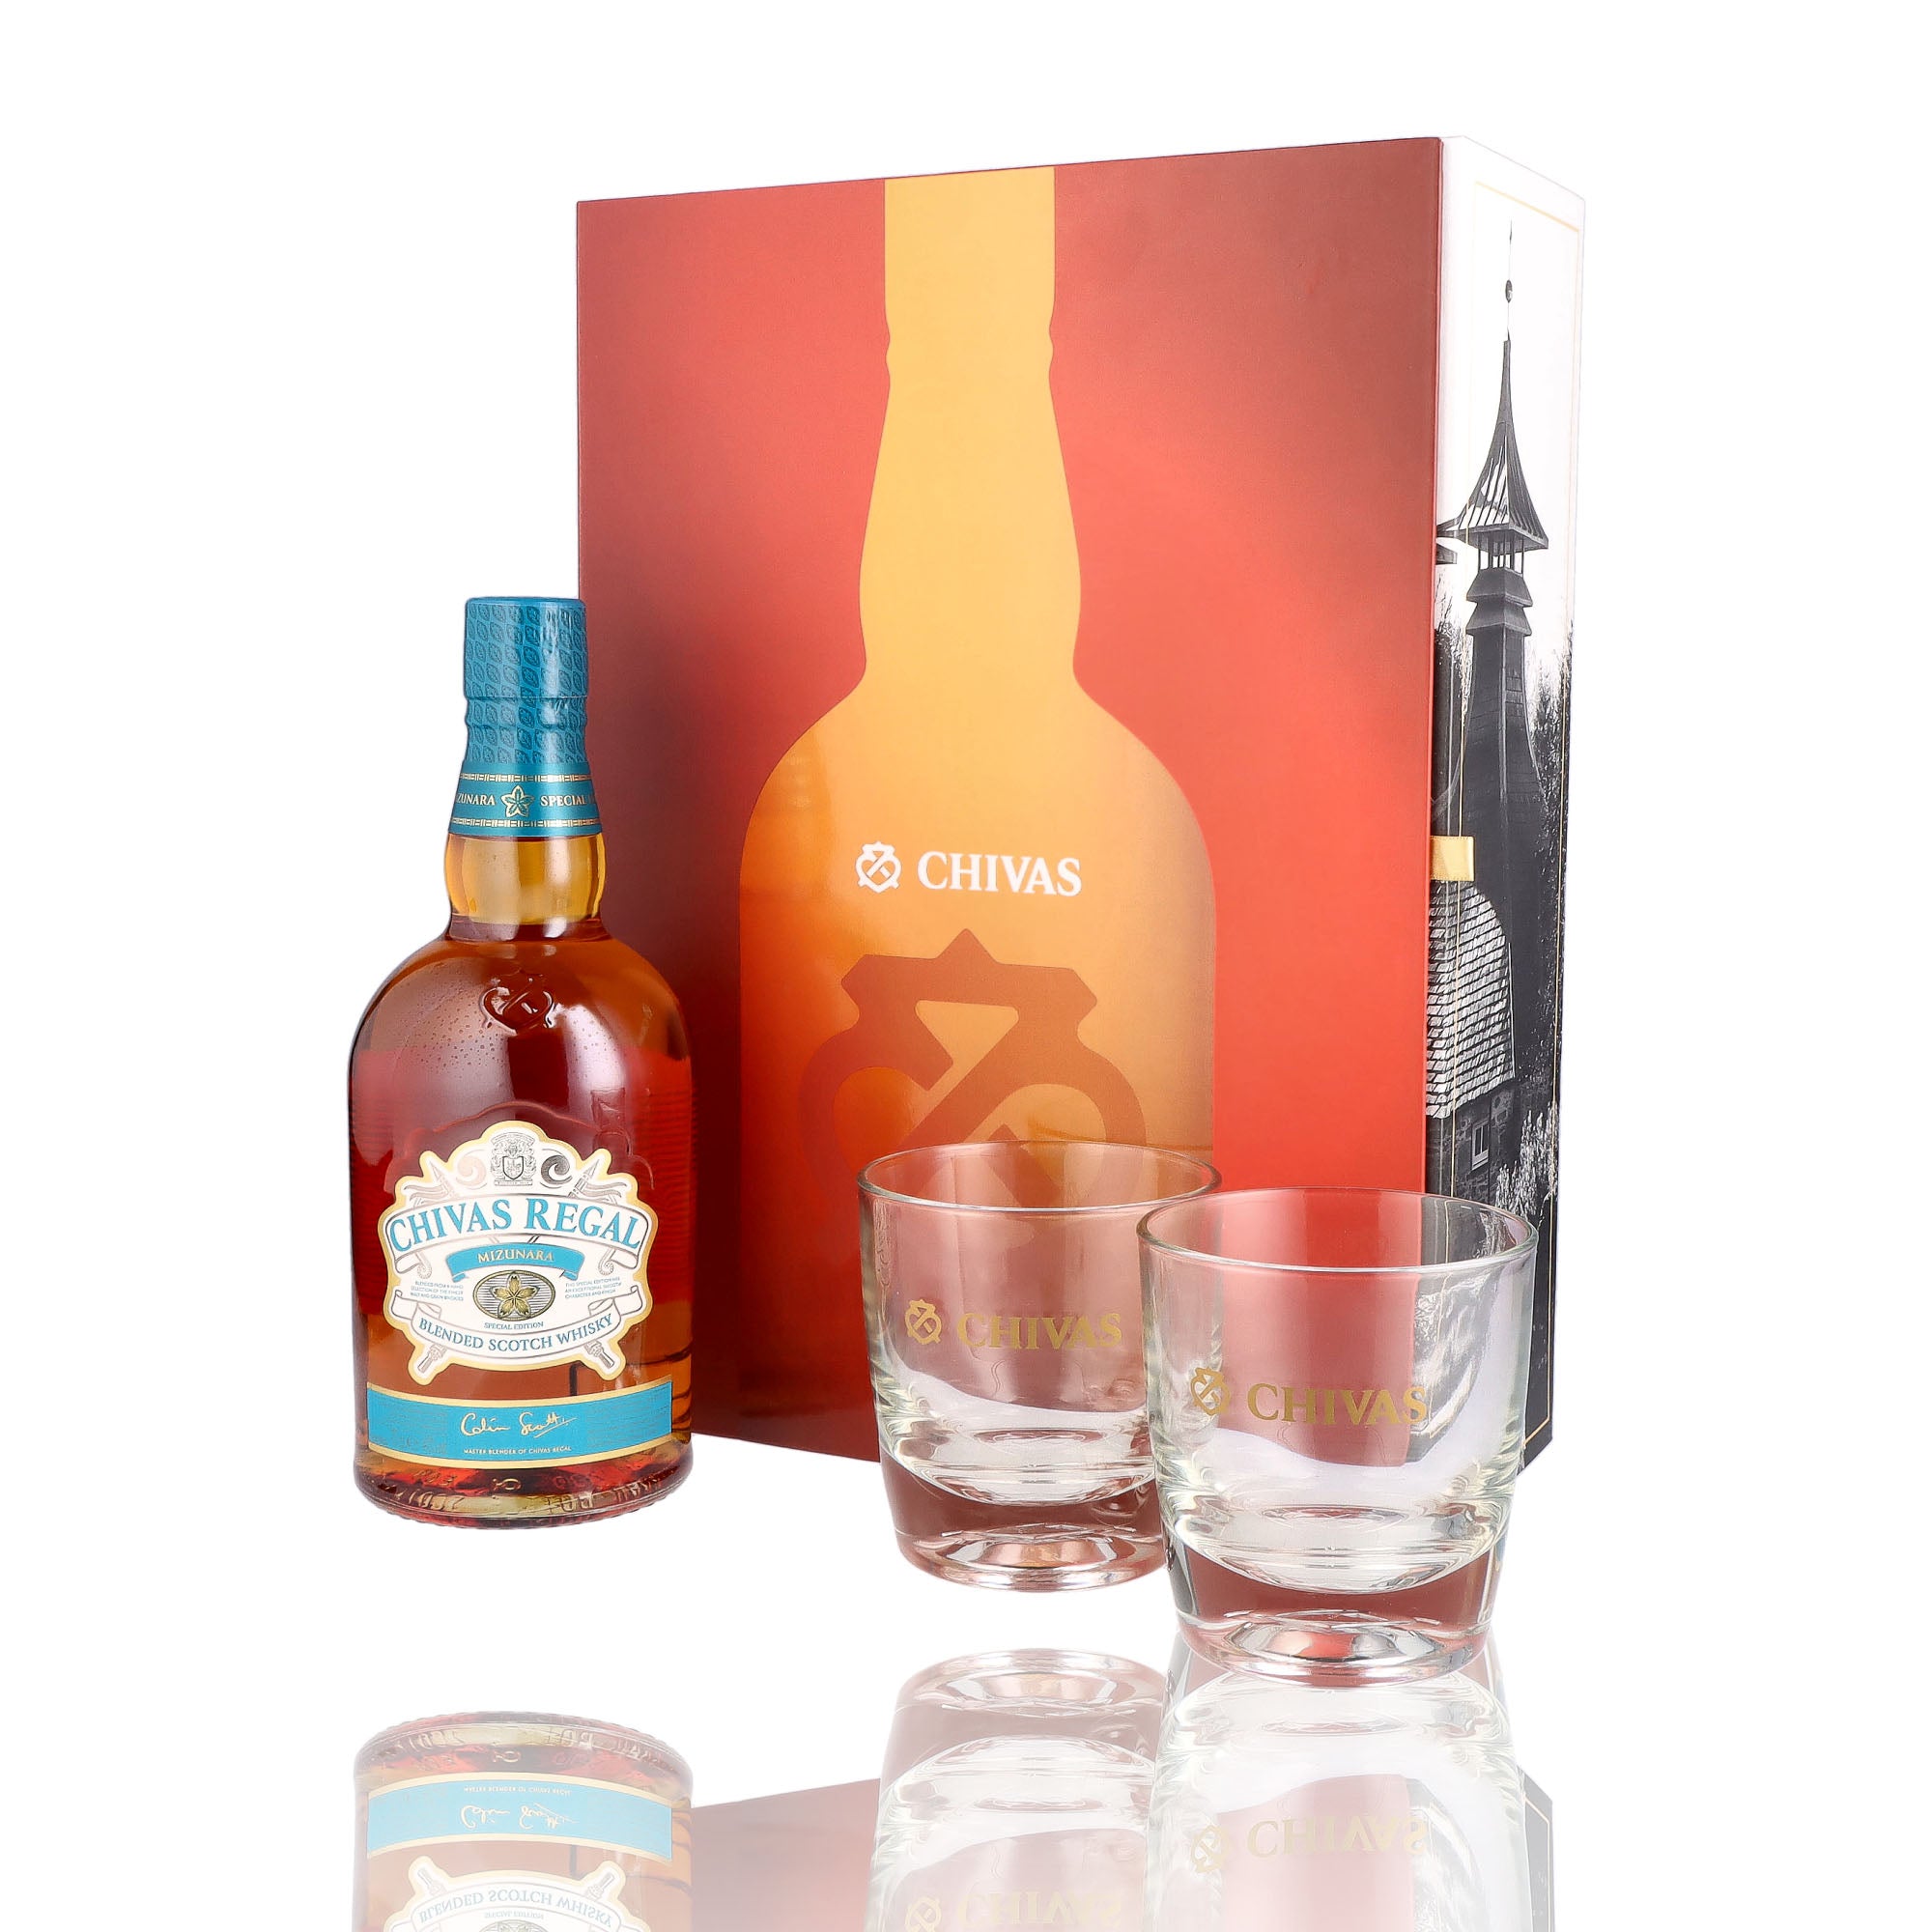 Un coffret de Scotch Whisky Blends de la marque Chivas Regal, nommée Mizunara + 2 verres.